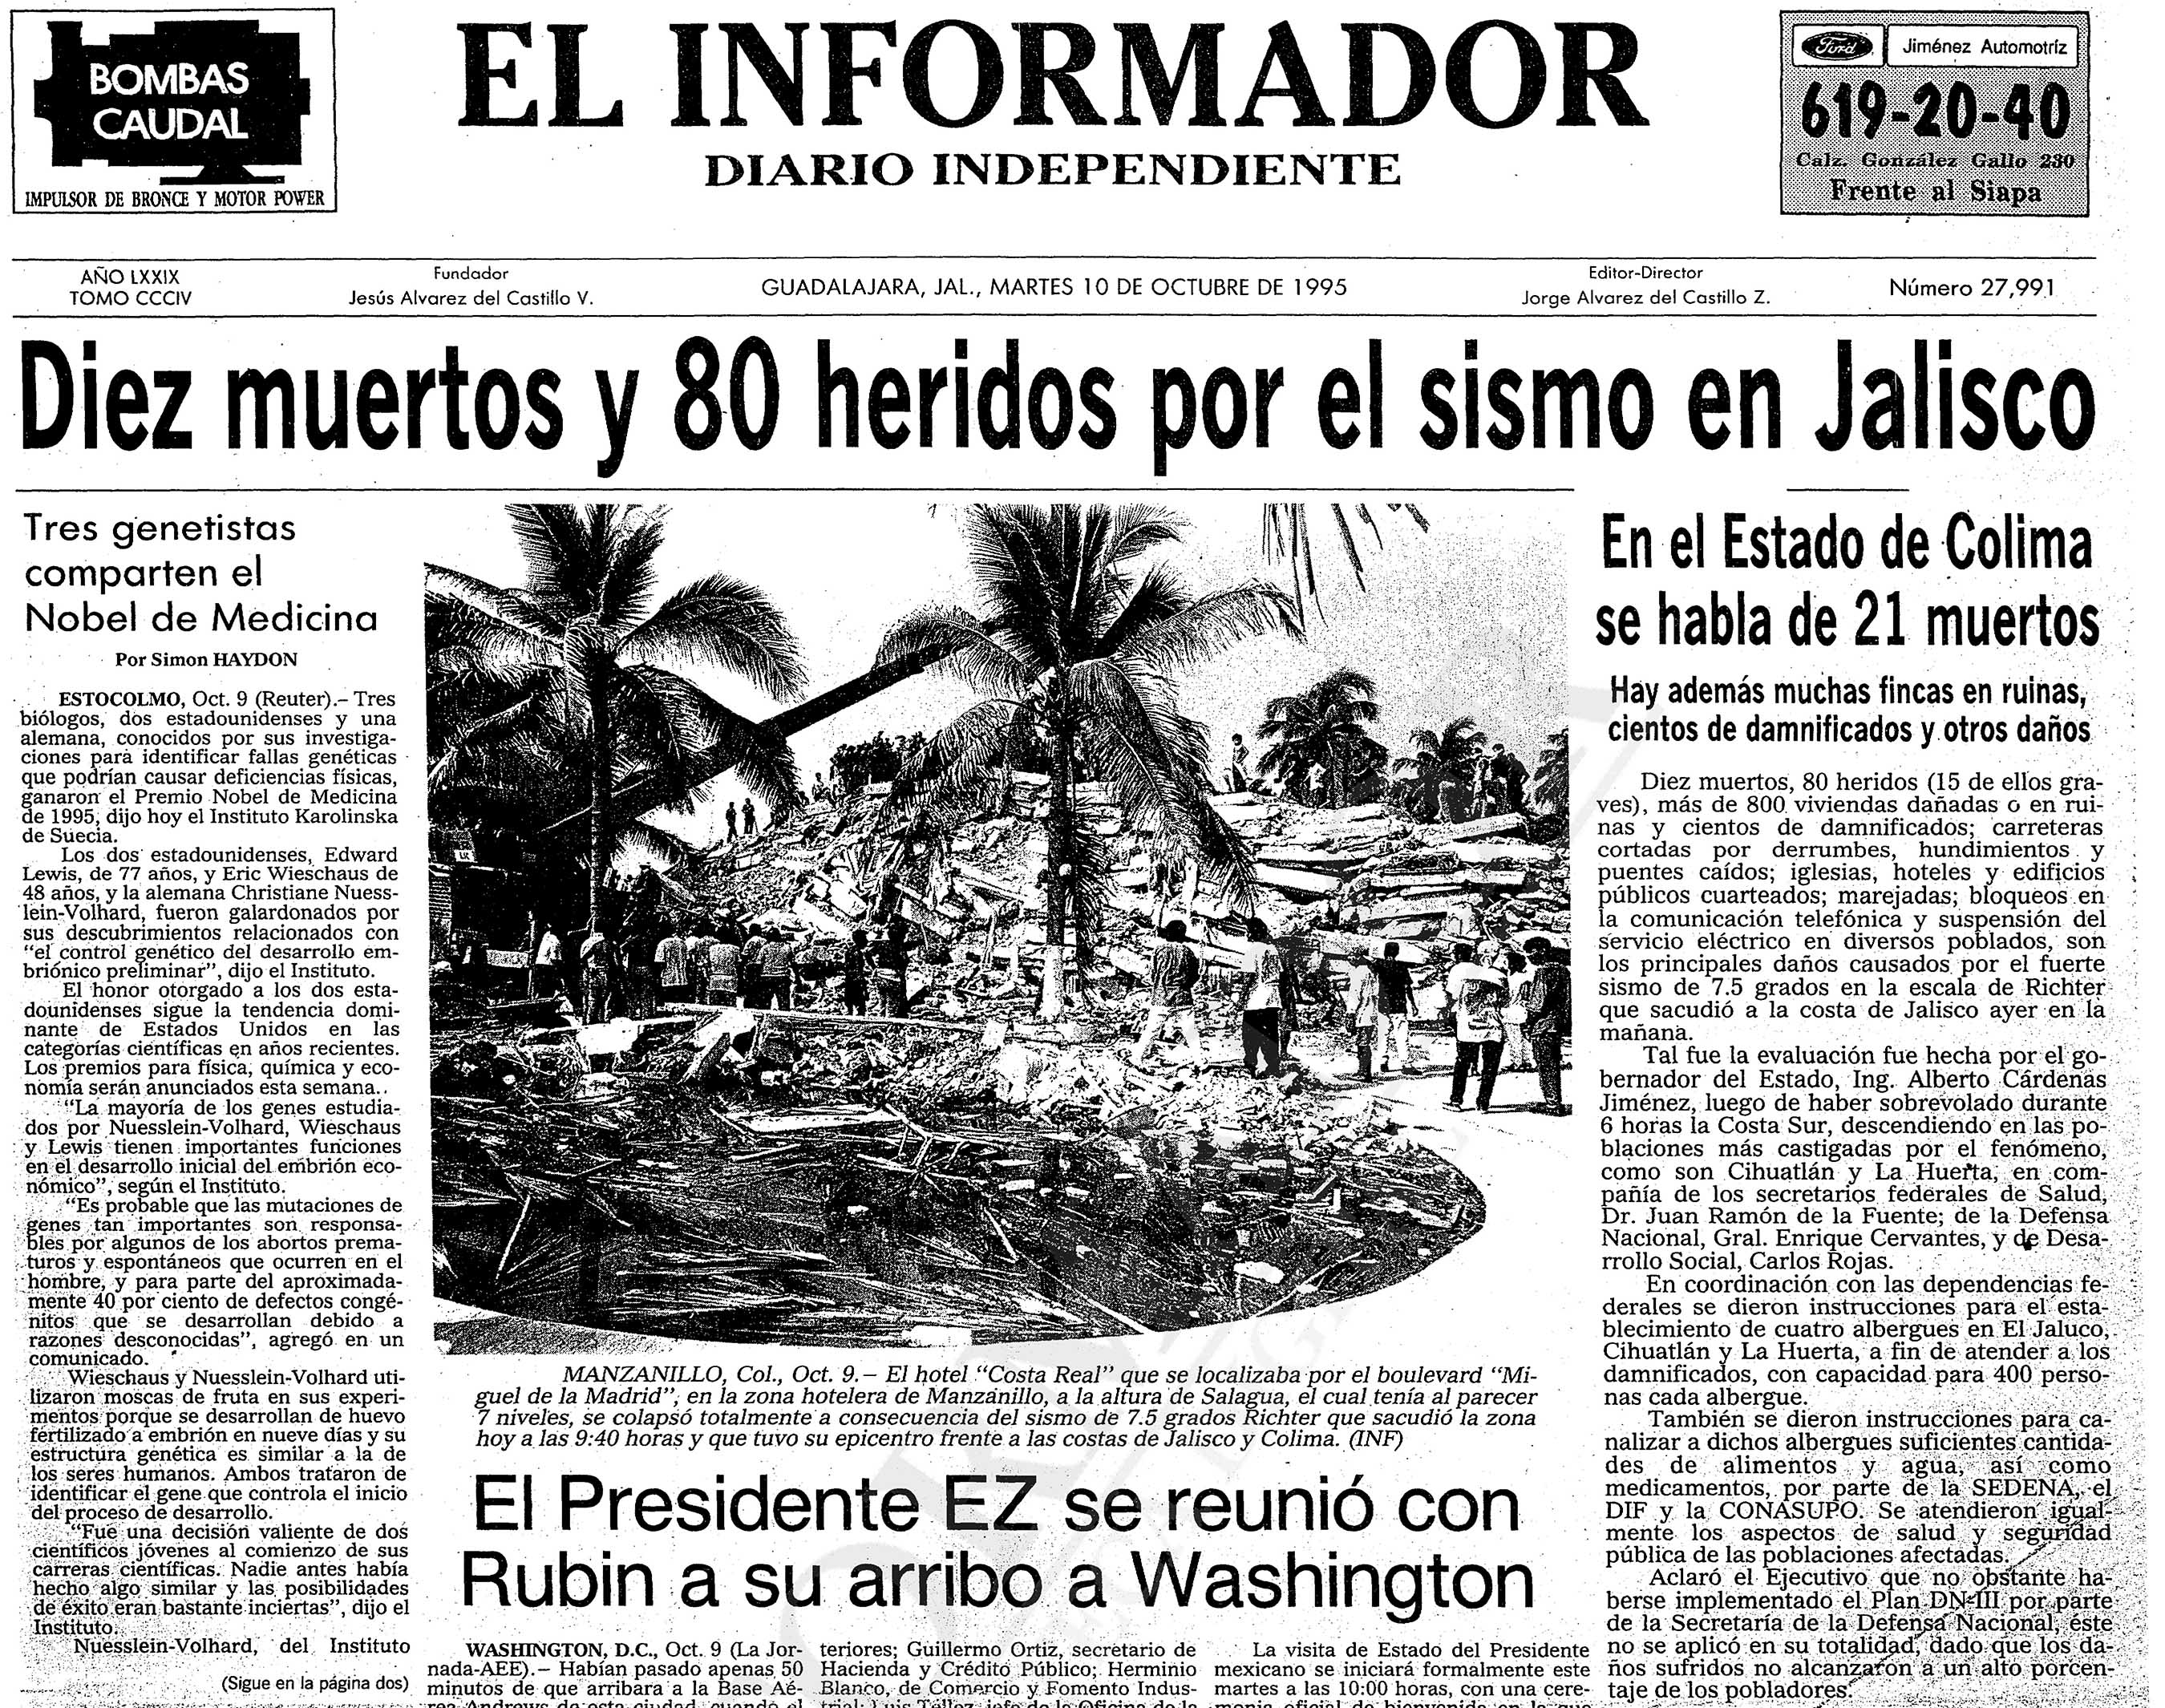 Portada de El Informador, 10 de octubre de 1995.